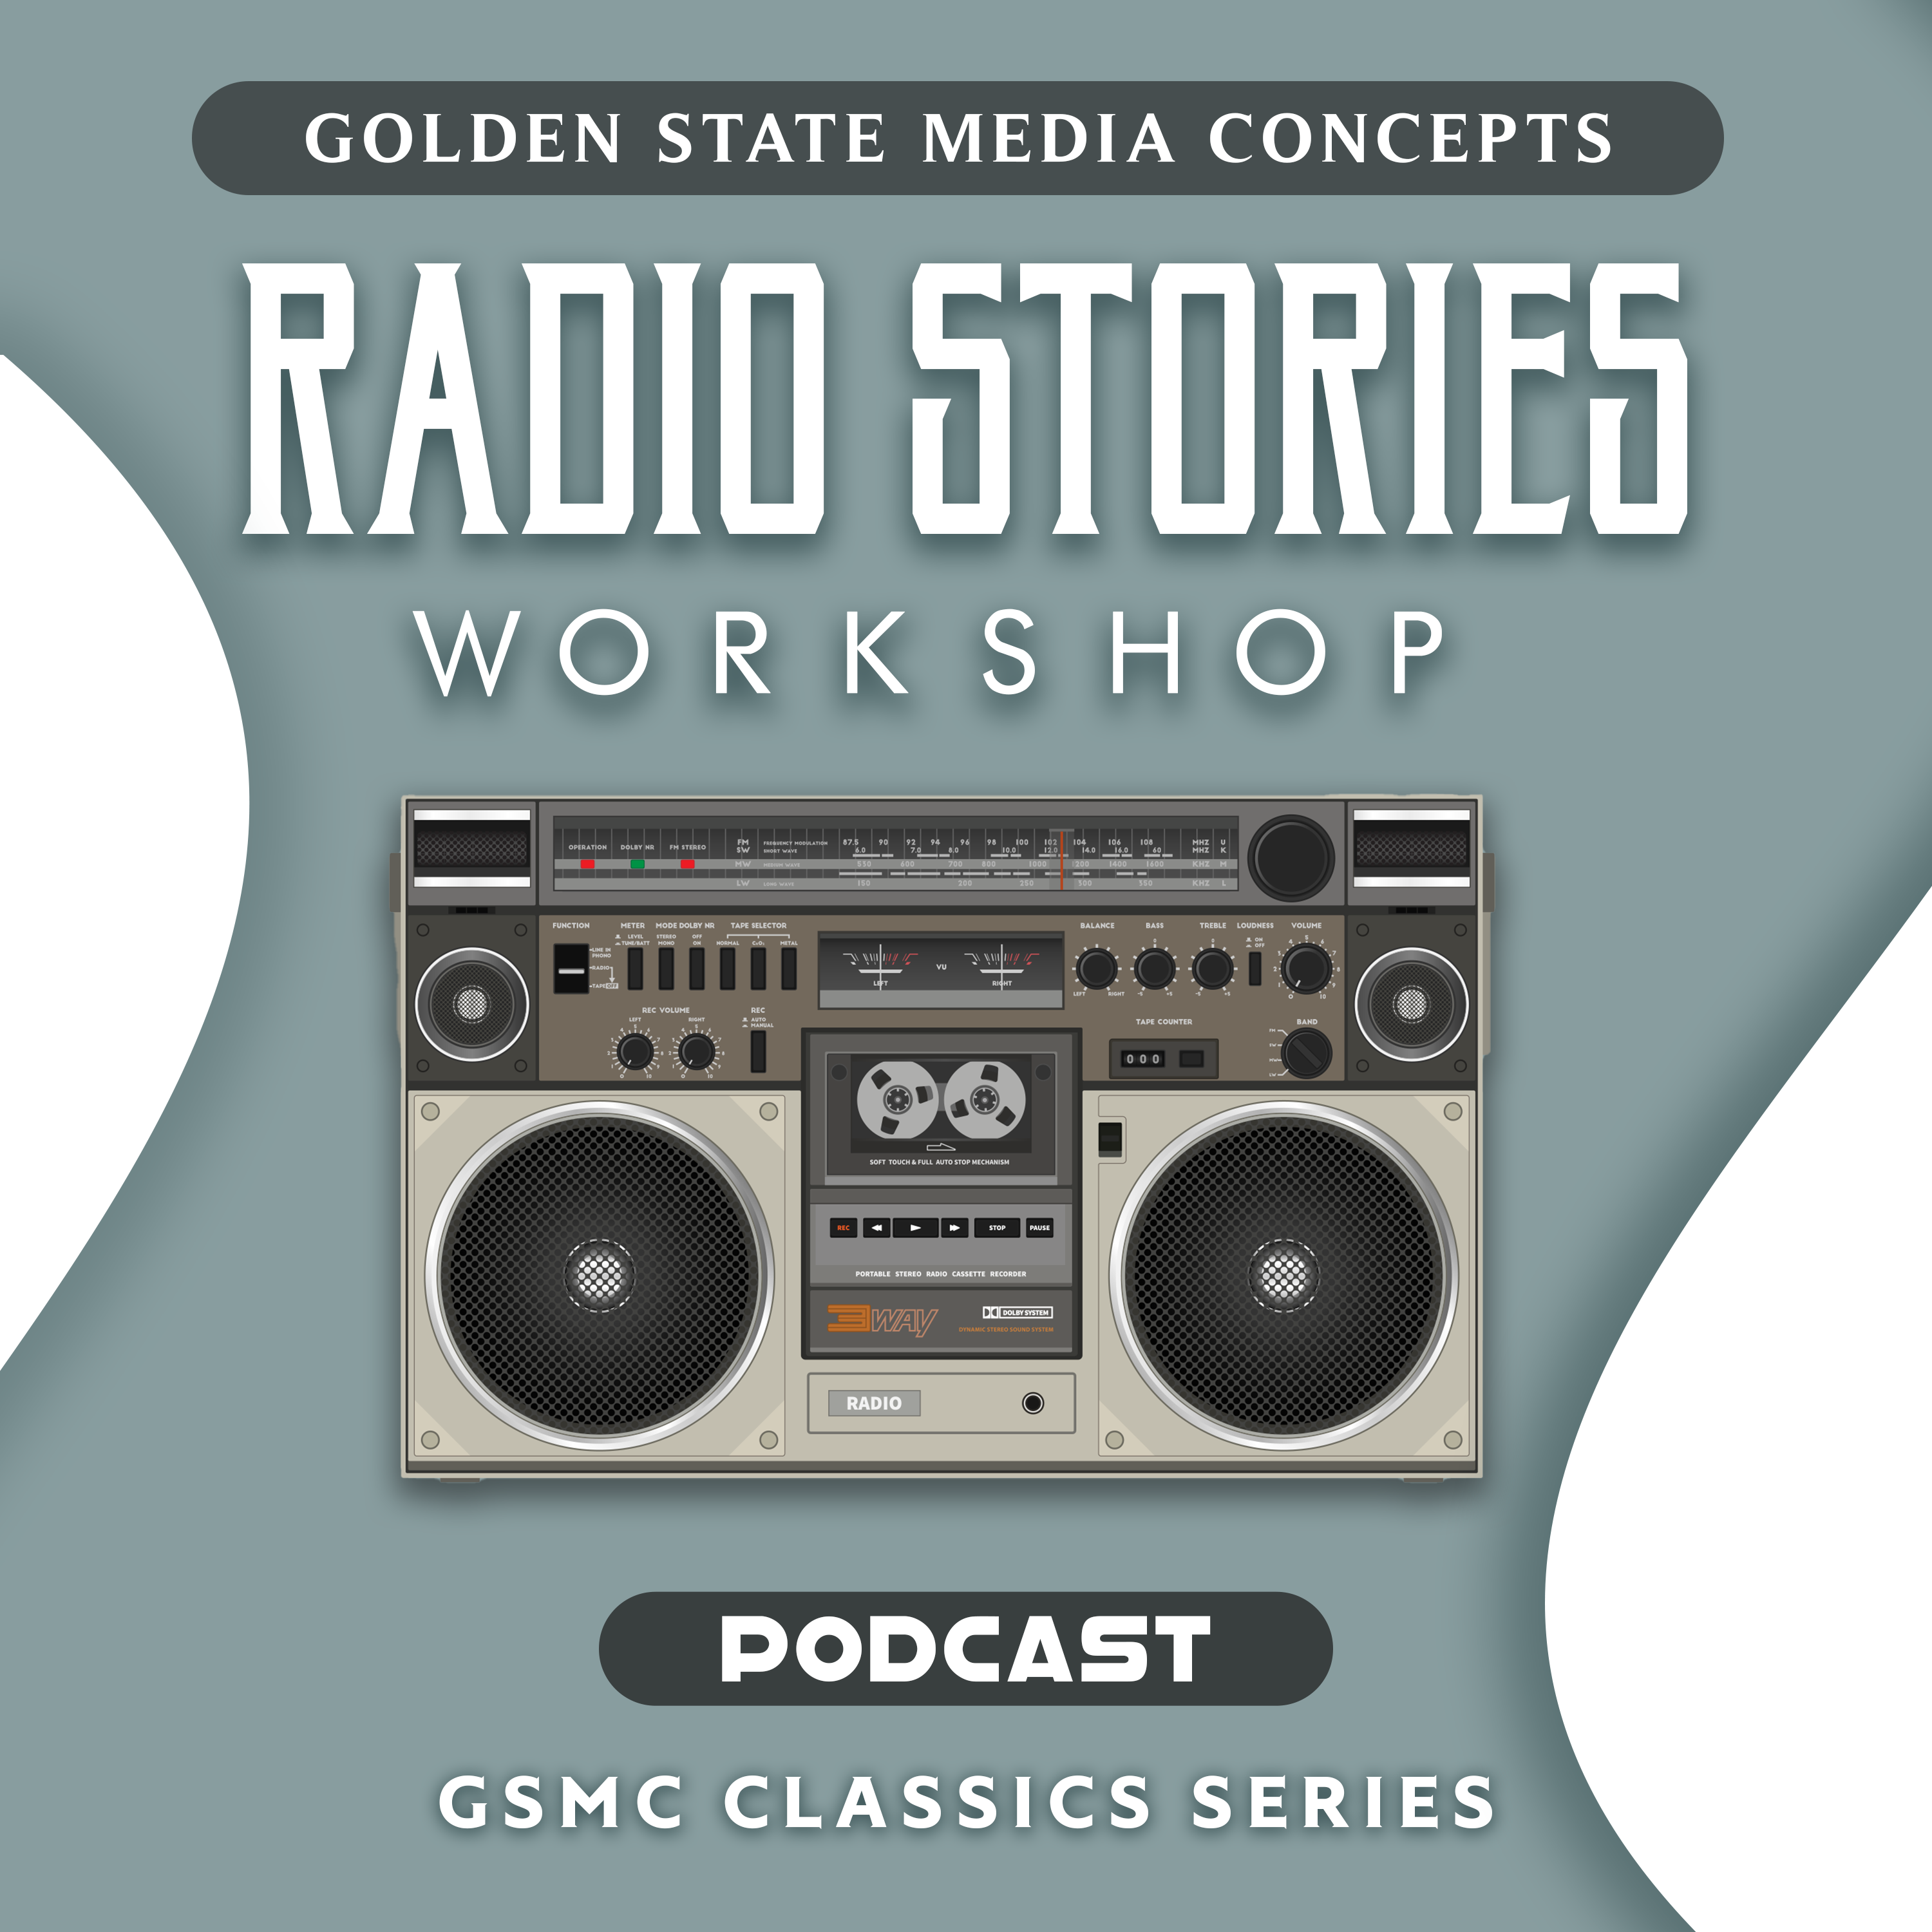 GSMC Classics: Radio Stories Workshop